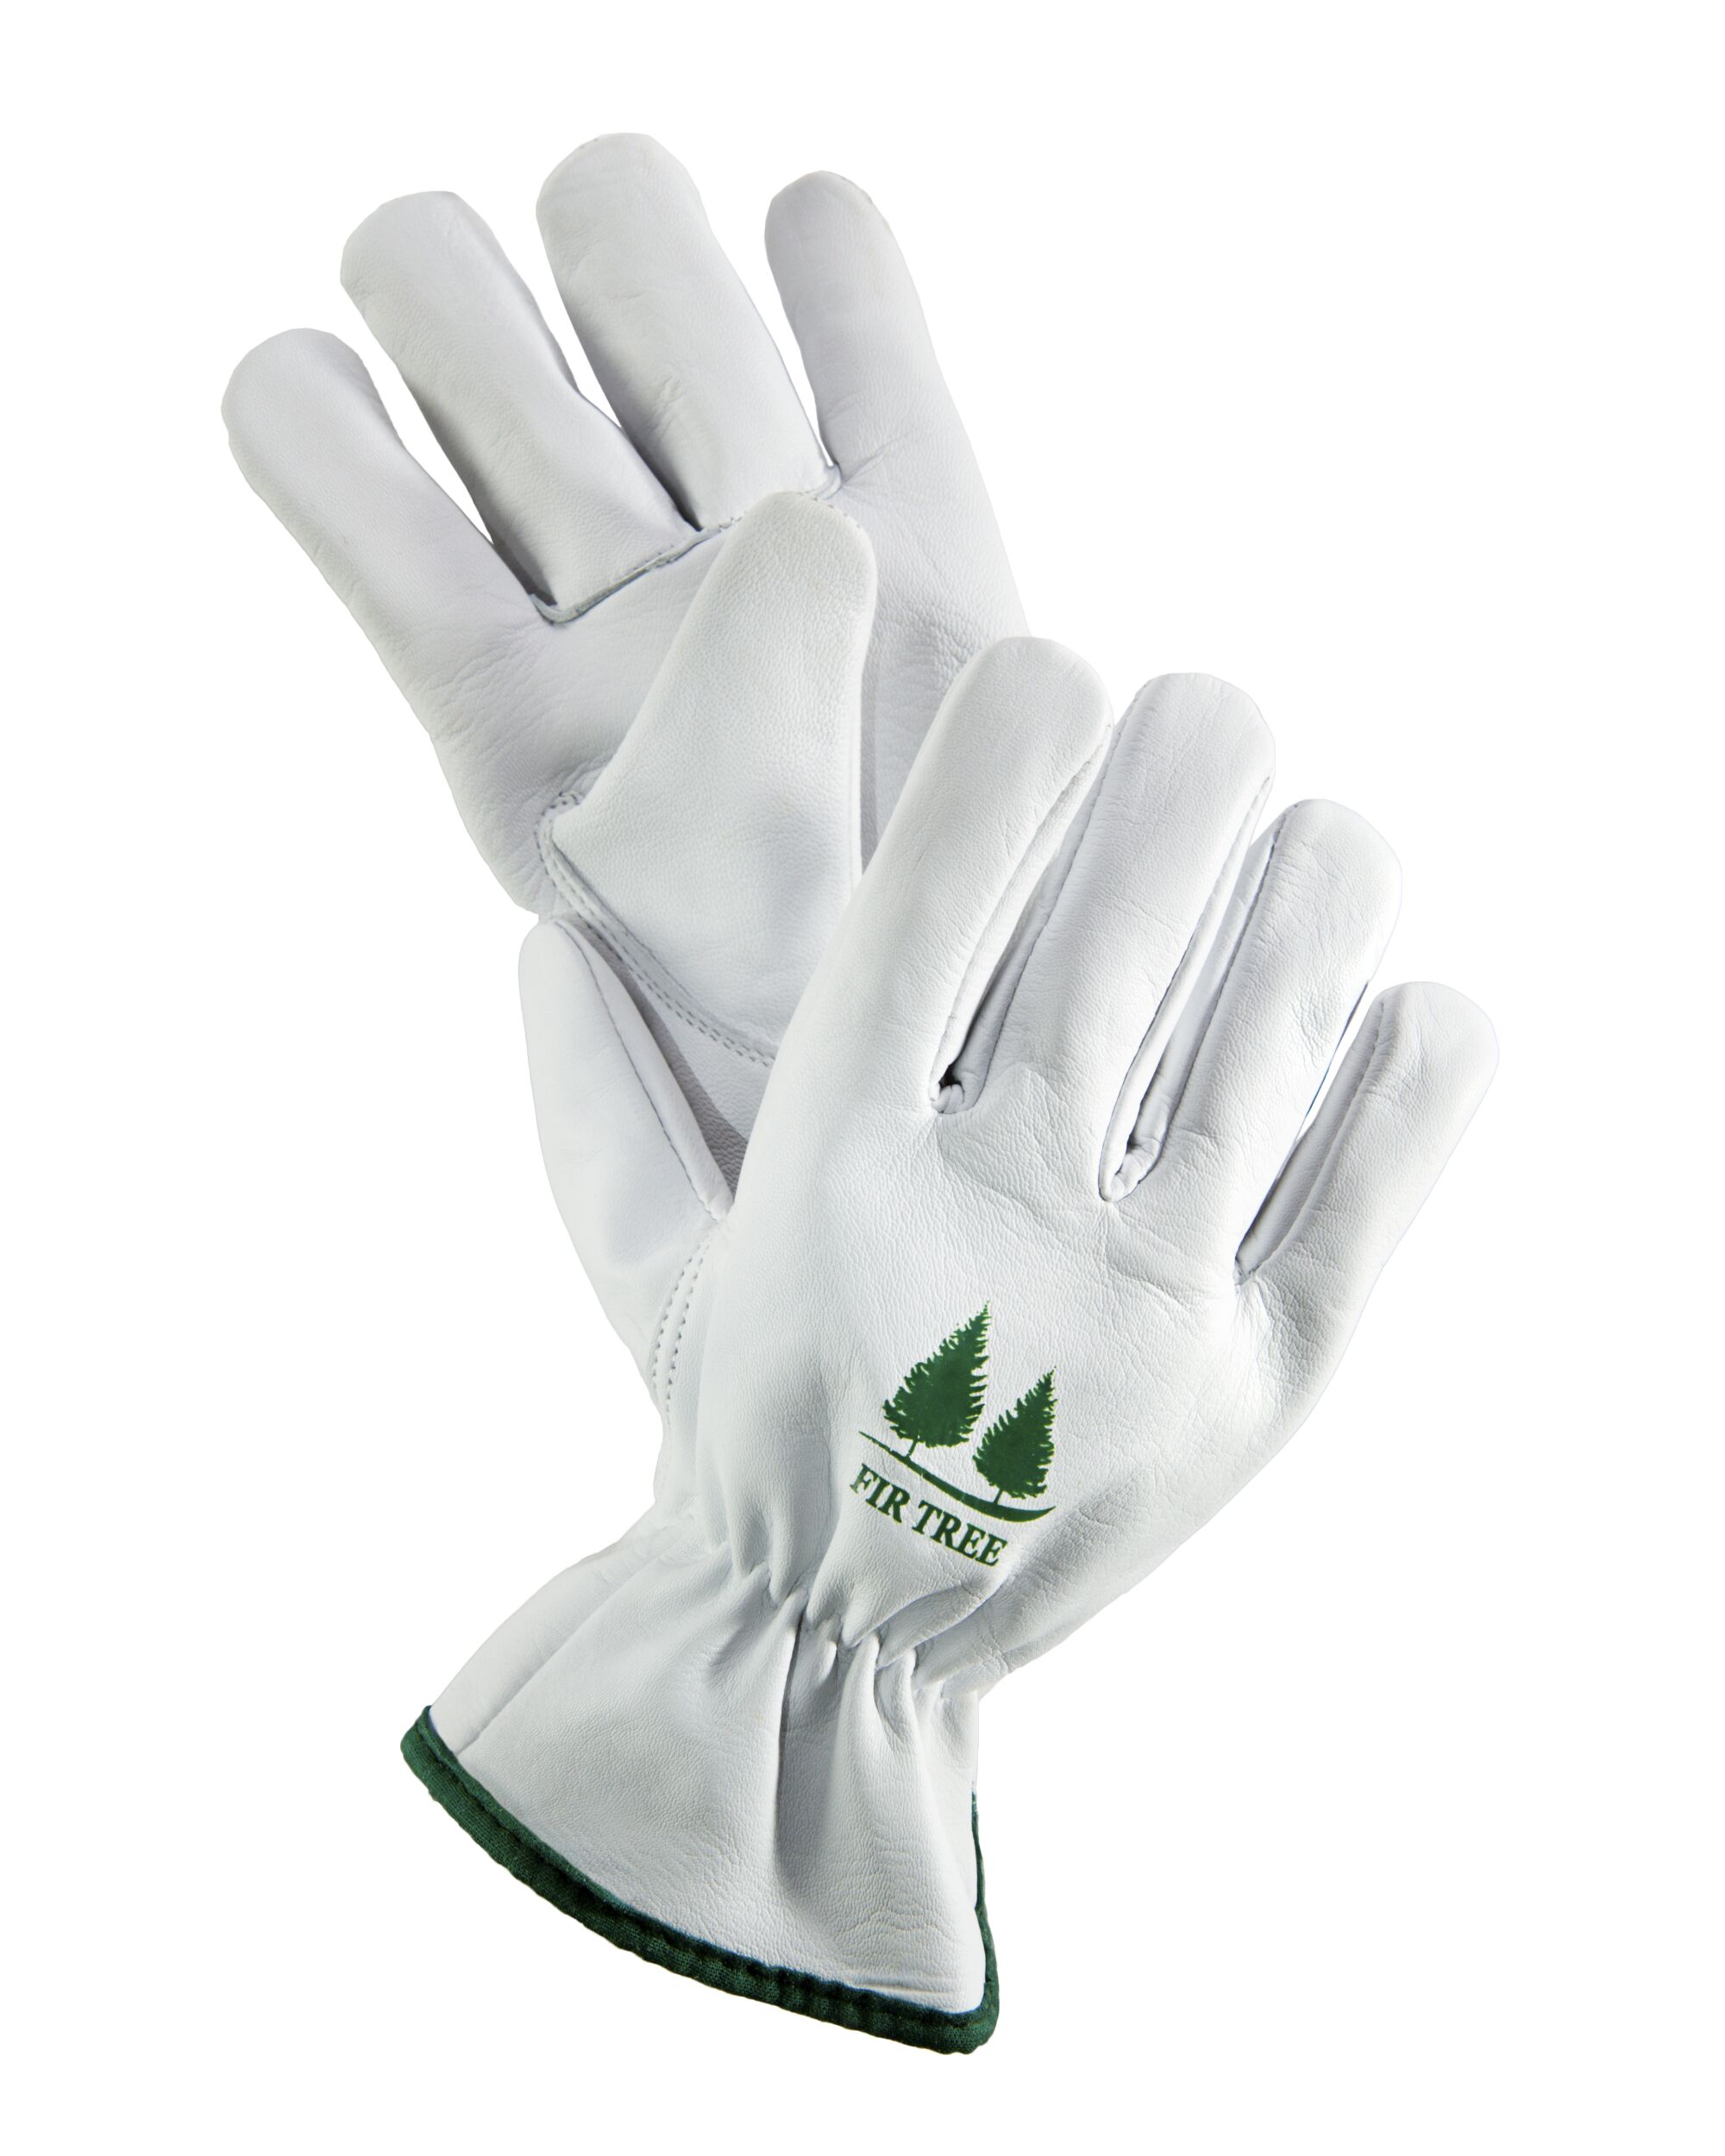 Firtree goatskin utility gloves